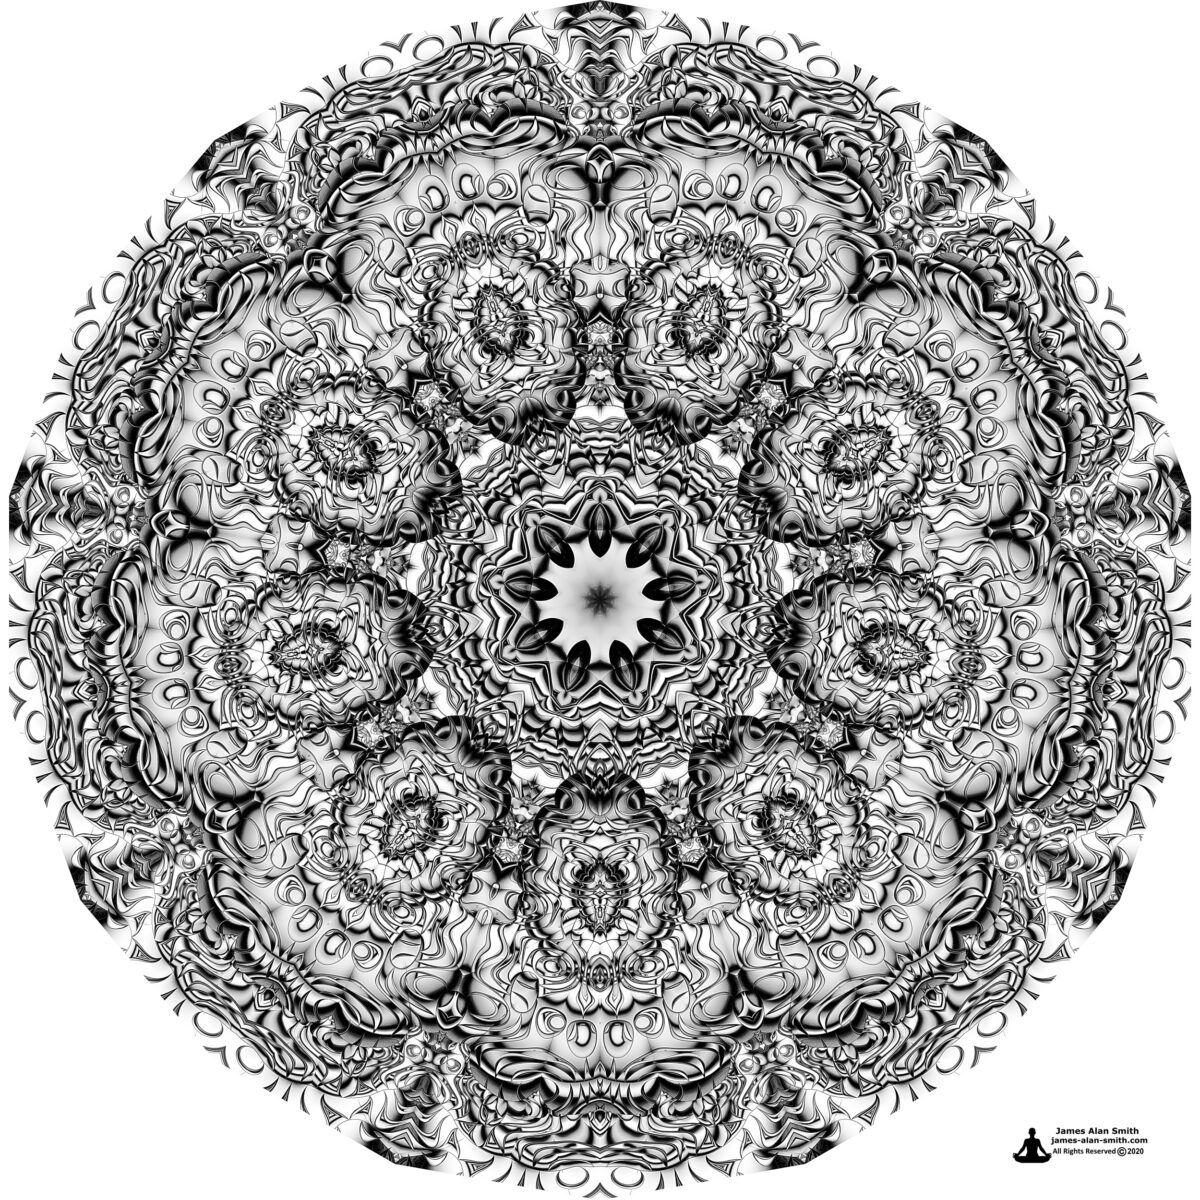 Unusual Mandala Series #06132020: Artwork by James Alan Smith